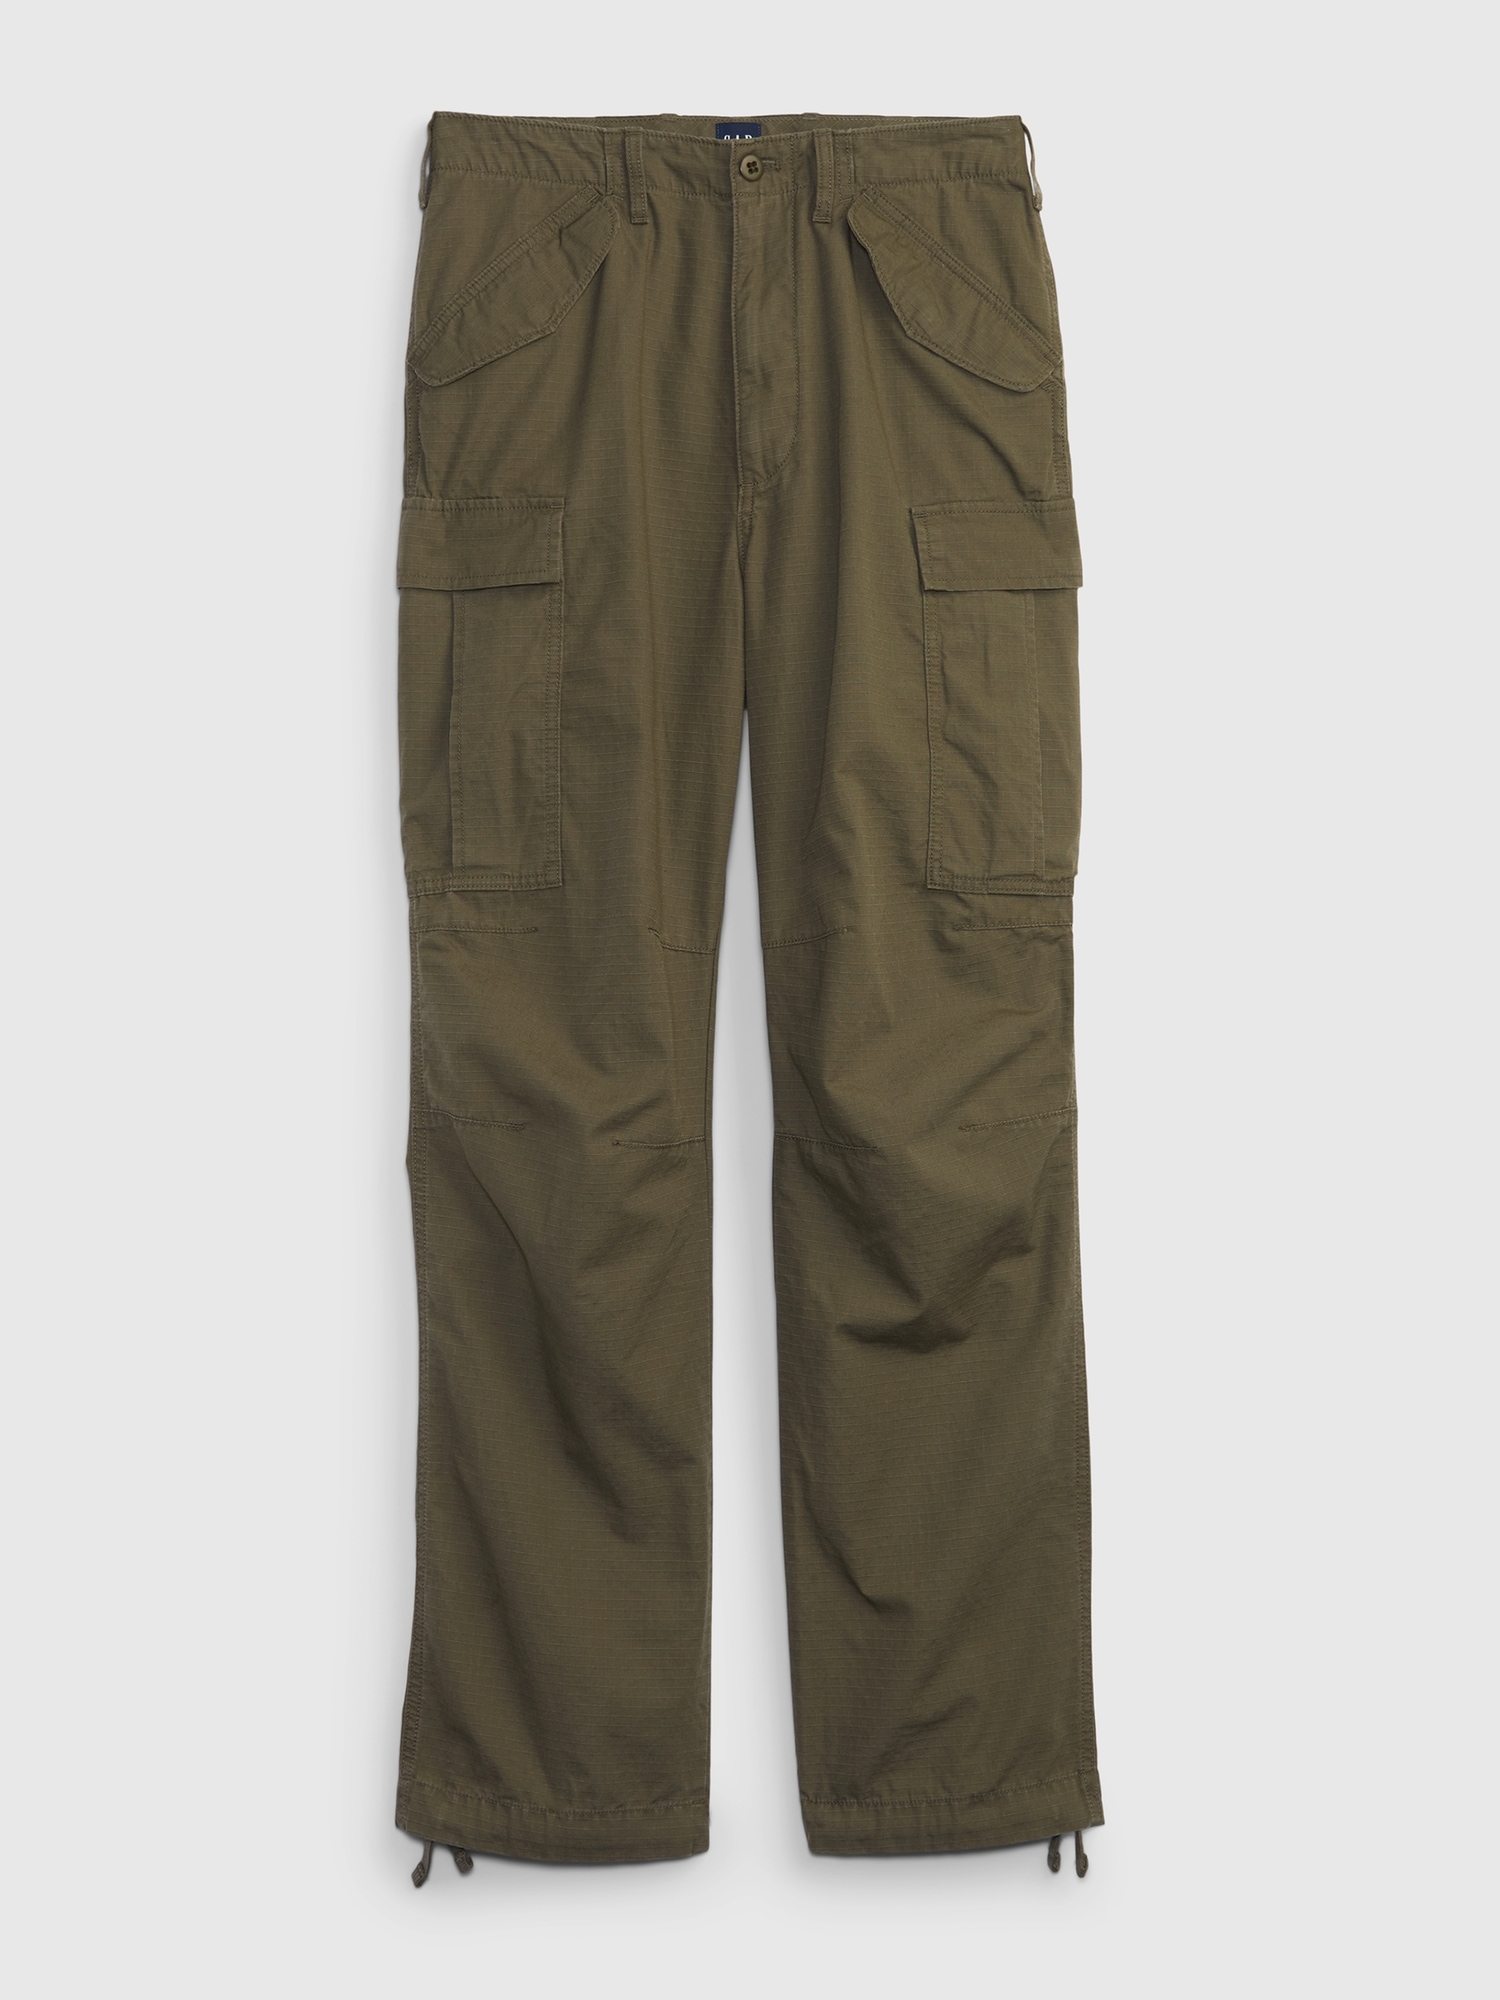 GAP Men's Elastic Ankle Drawstring Waist Long Pants (Tannin, S) -  Walmart.com